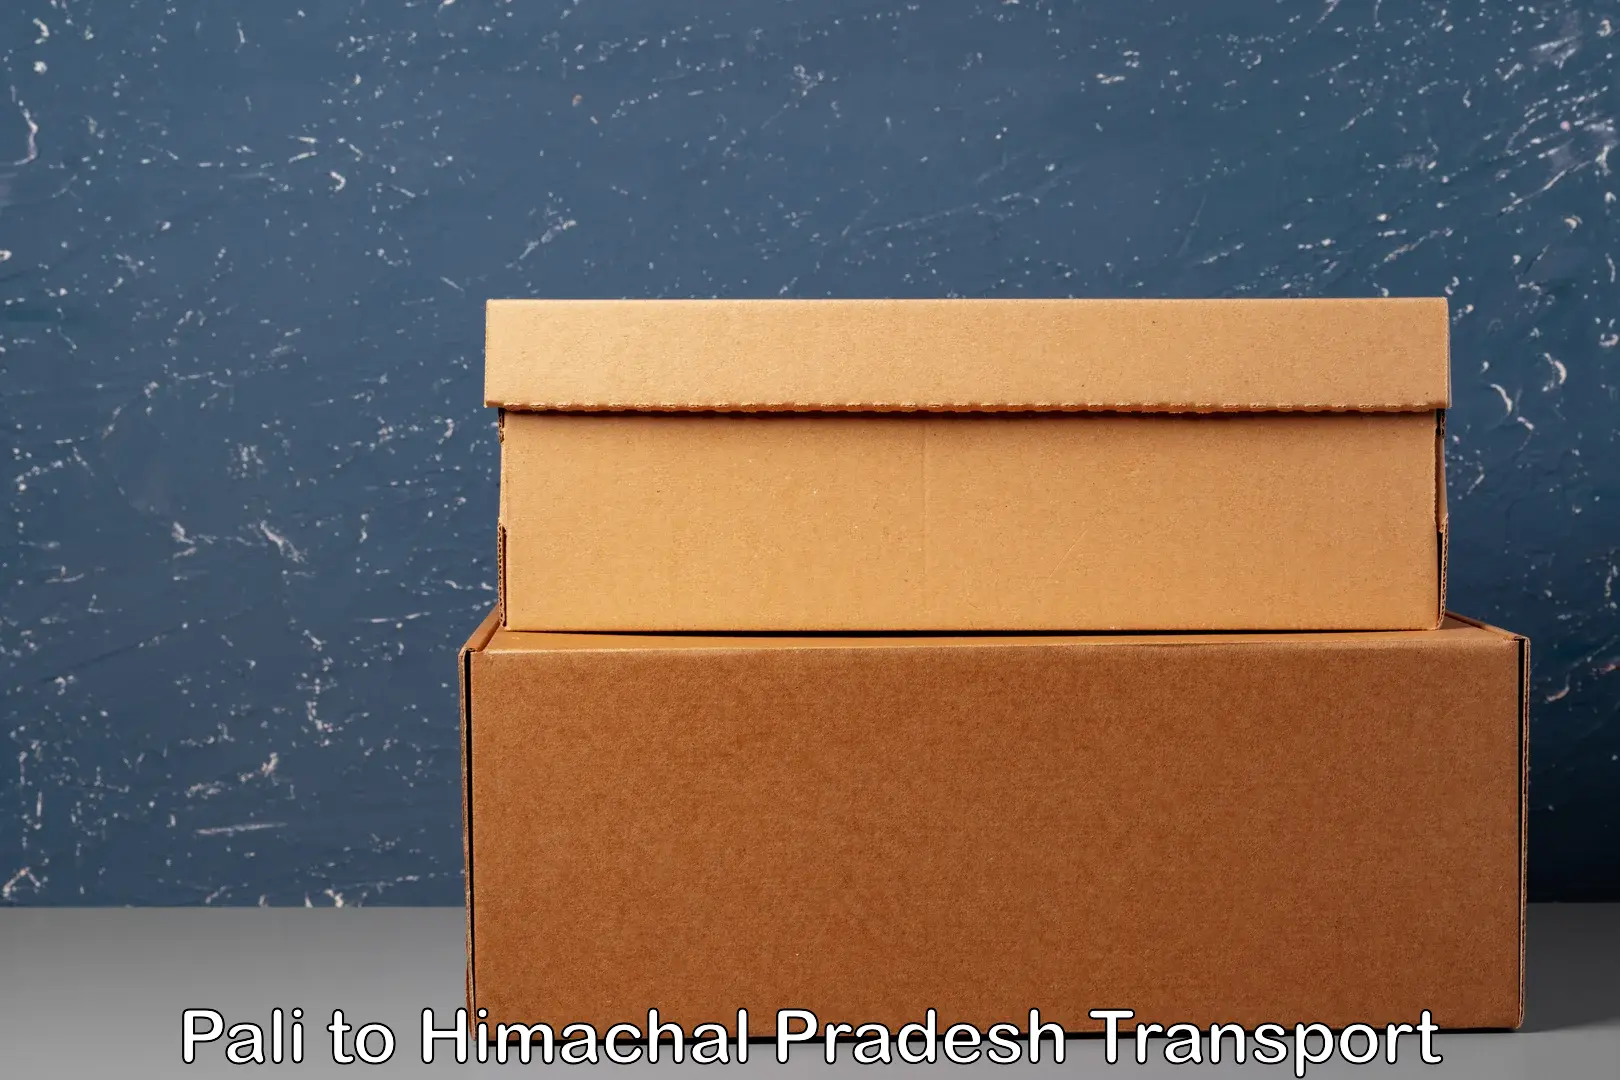 Delivery service Pali to Himachal Pradesh